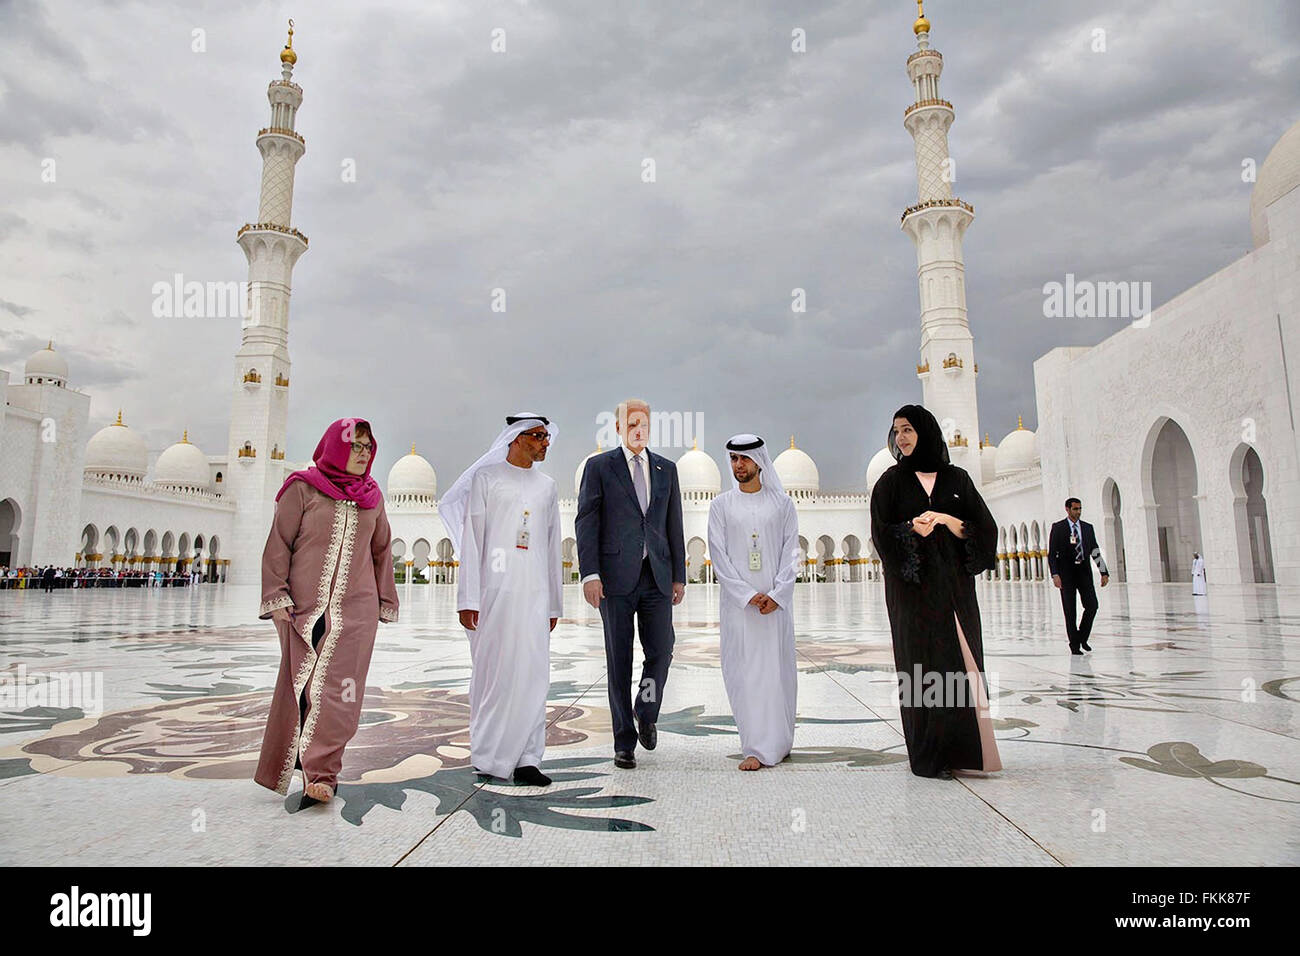 U.S Vice President Joe Biden, center, tours the Grand Mosque with U.S. Ambassador Barbara Leaf, left, and UAE officials March 7, 2016 in Abu Dhabi, United Arab Emirates. Stock Photo